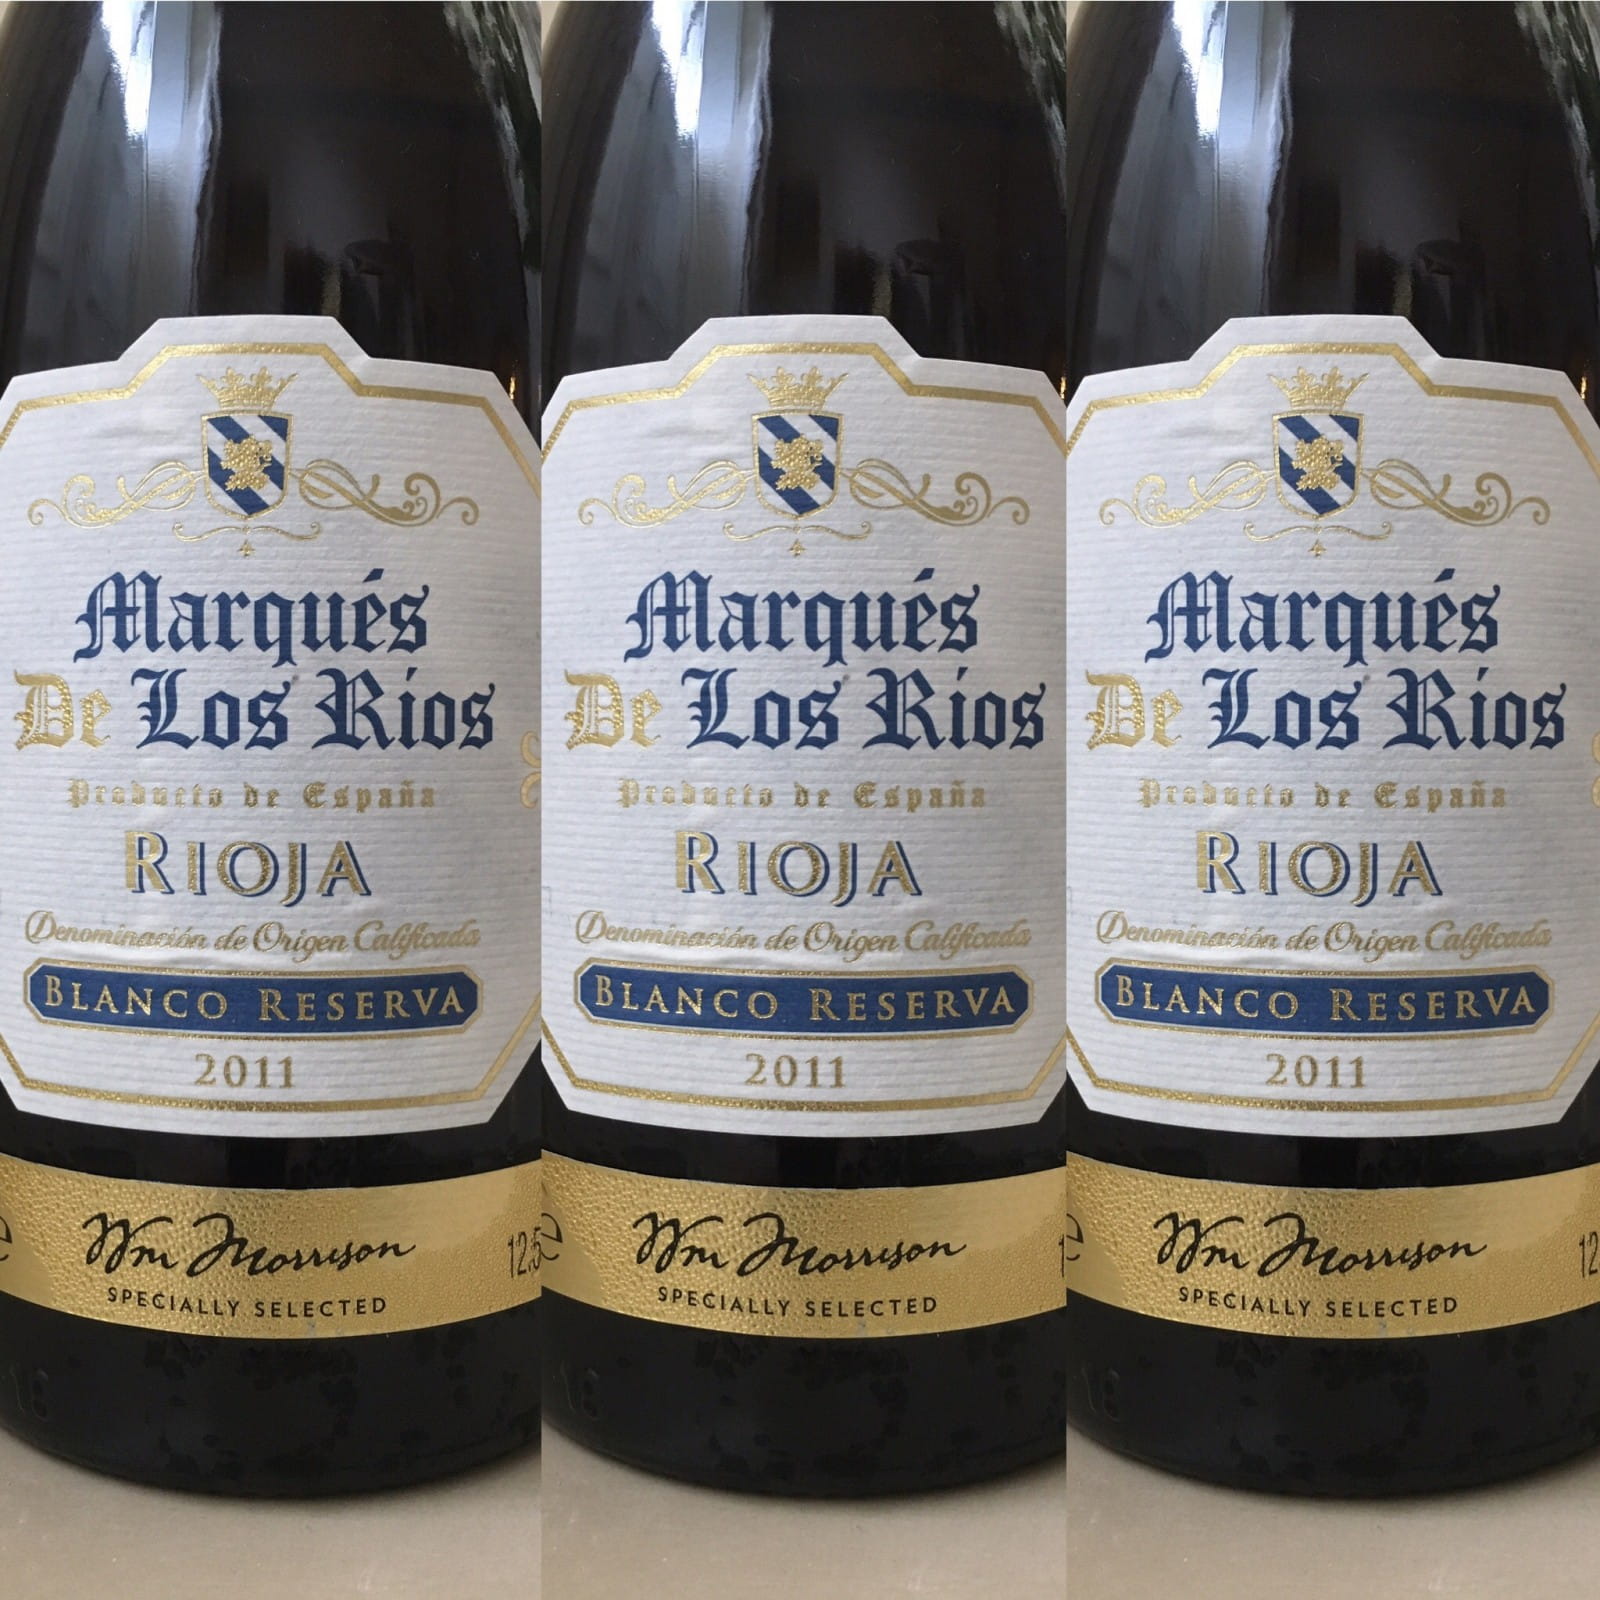  Morrisons The Best Marques de Los Rios Rioja Blanco Reserva 2011